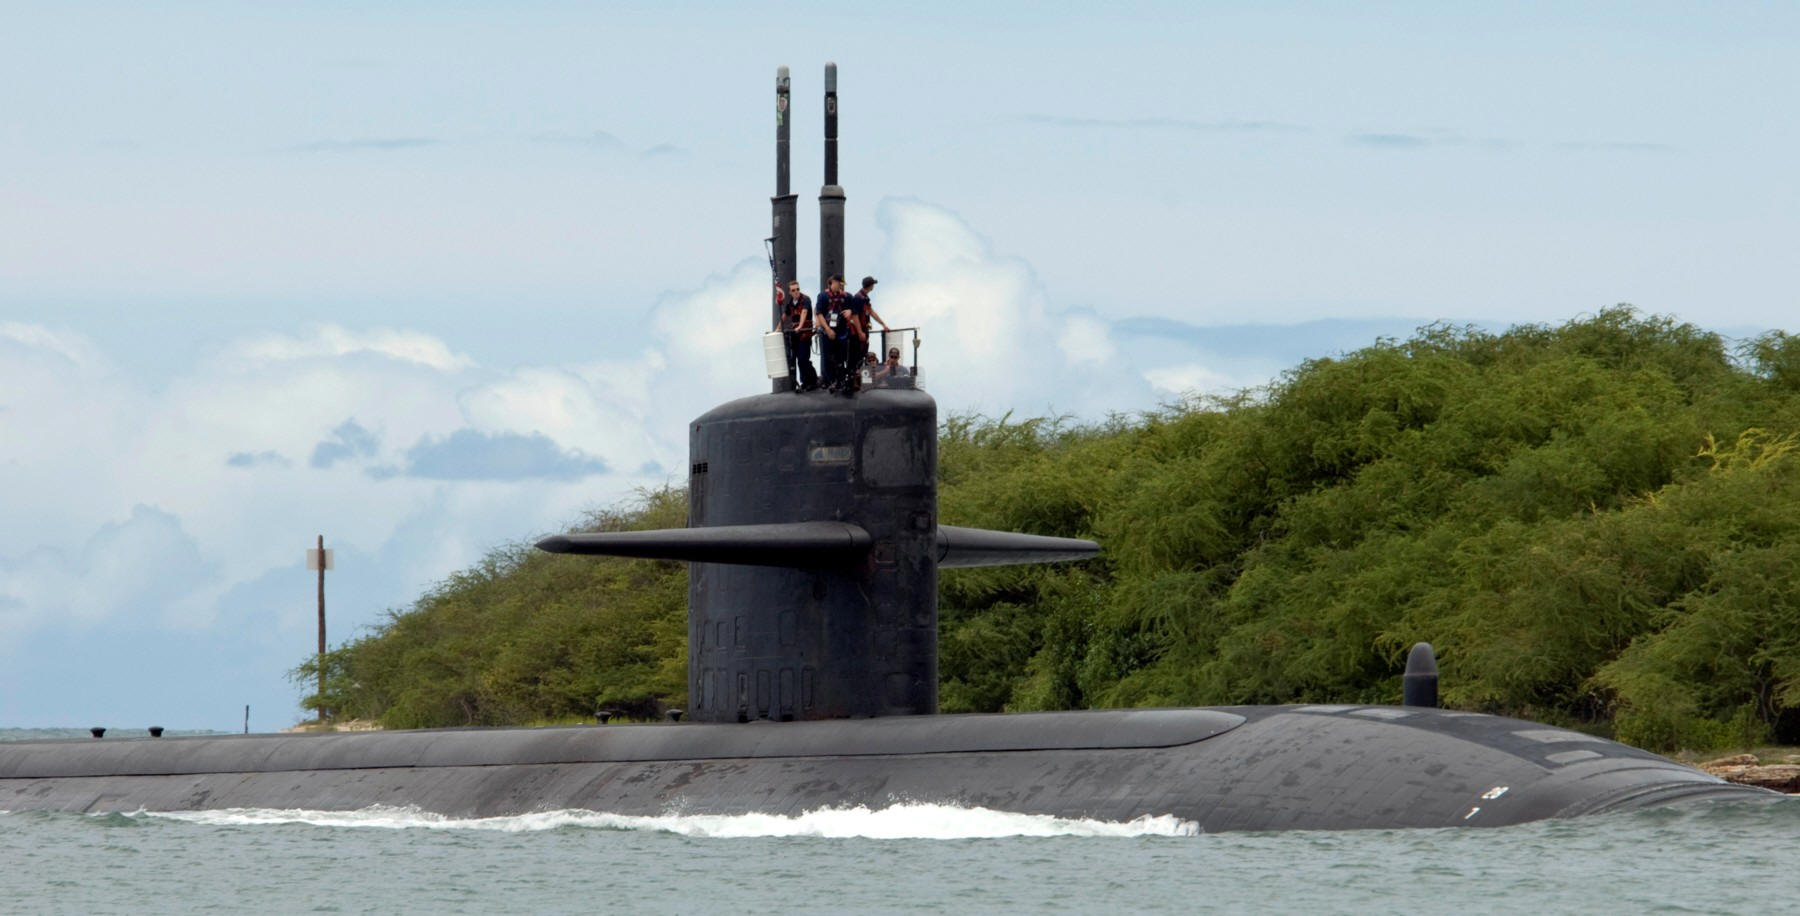 ssn-713 uss houston los angeles class attack submarine us navy newport news shipbuilding